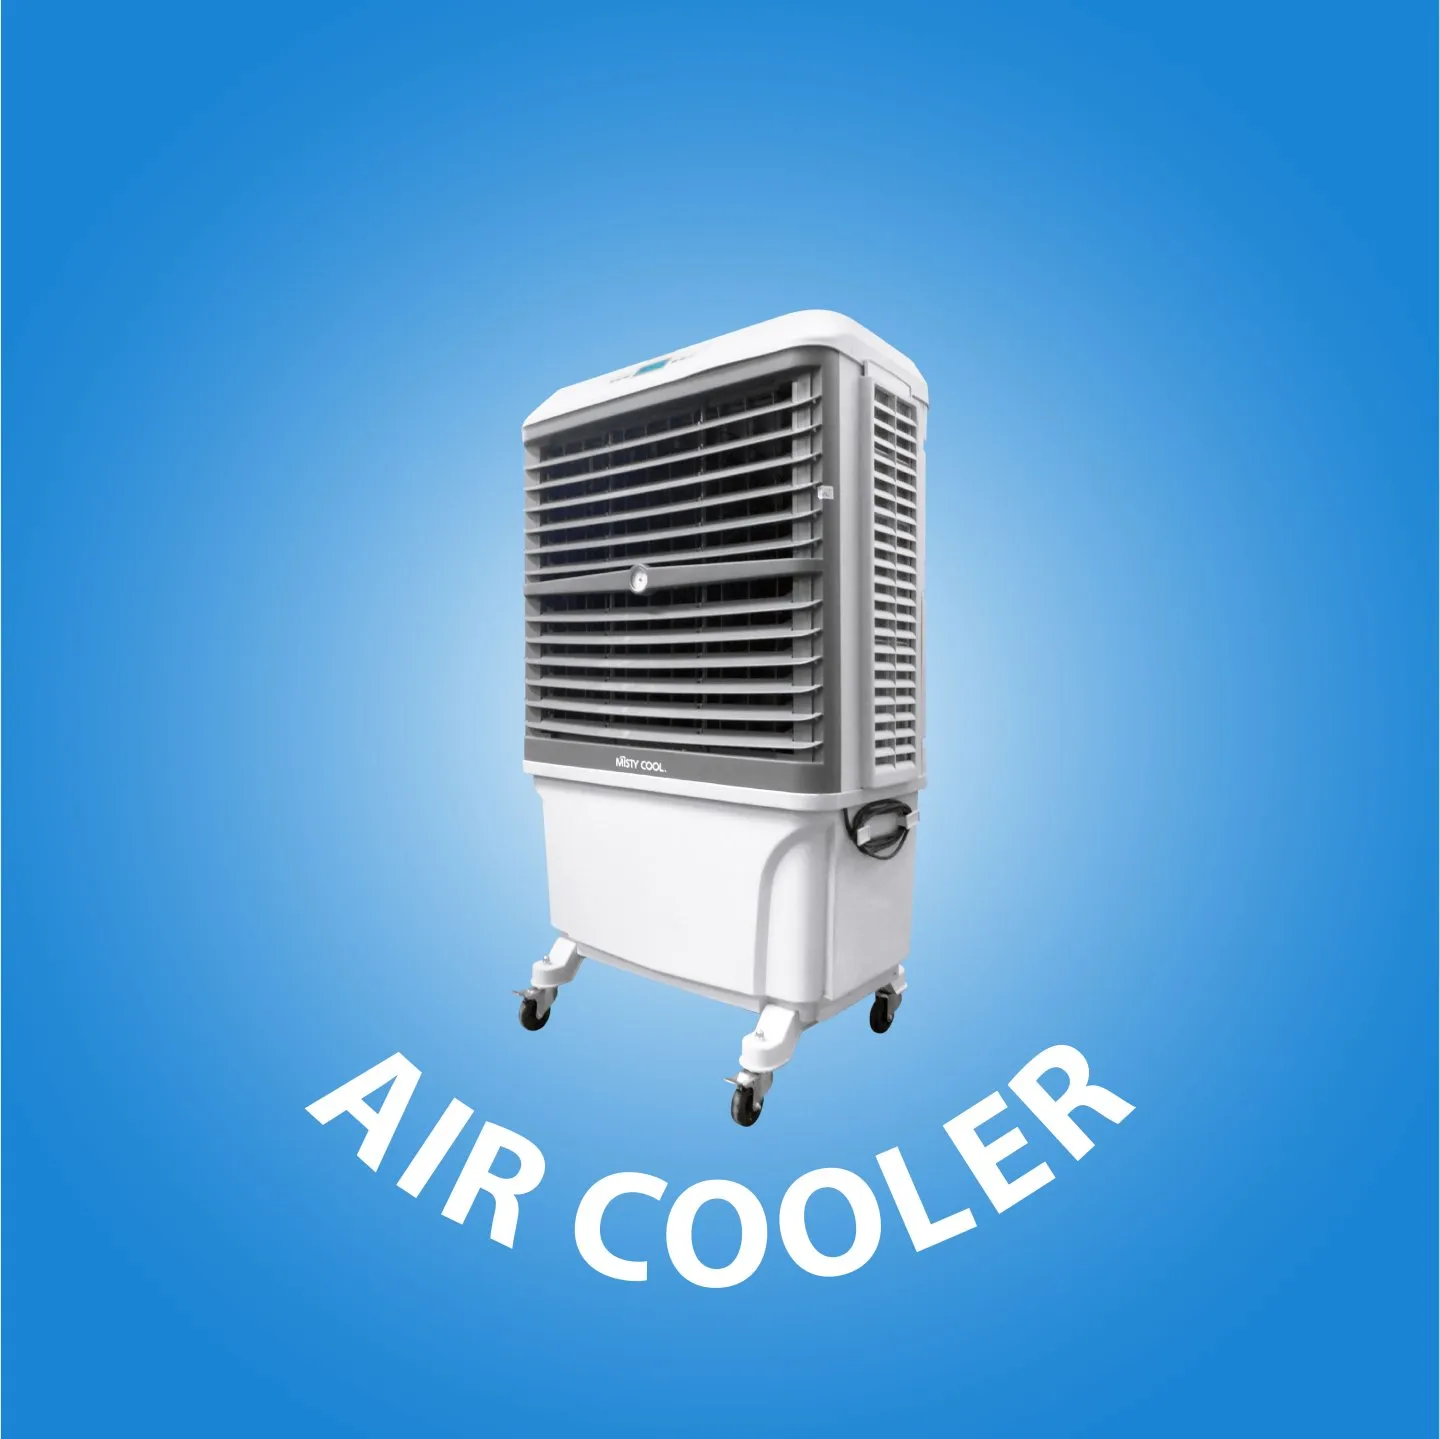  Air Cooler cover kategori website 02